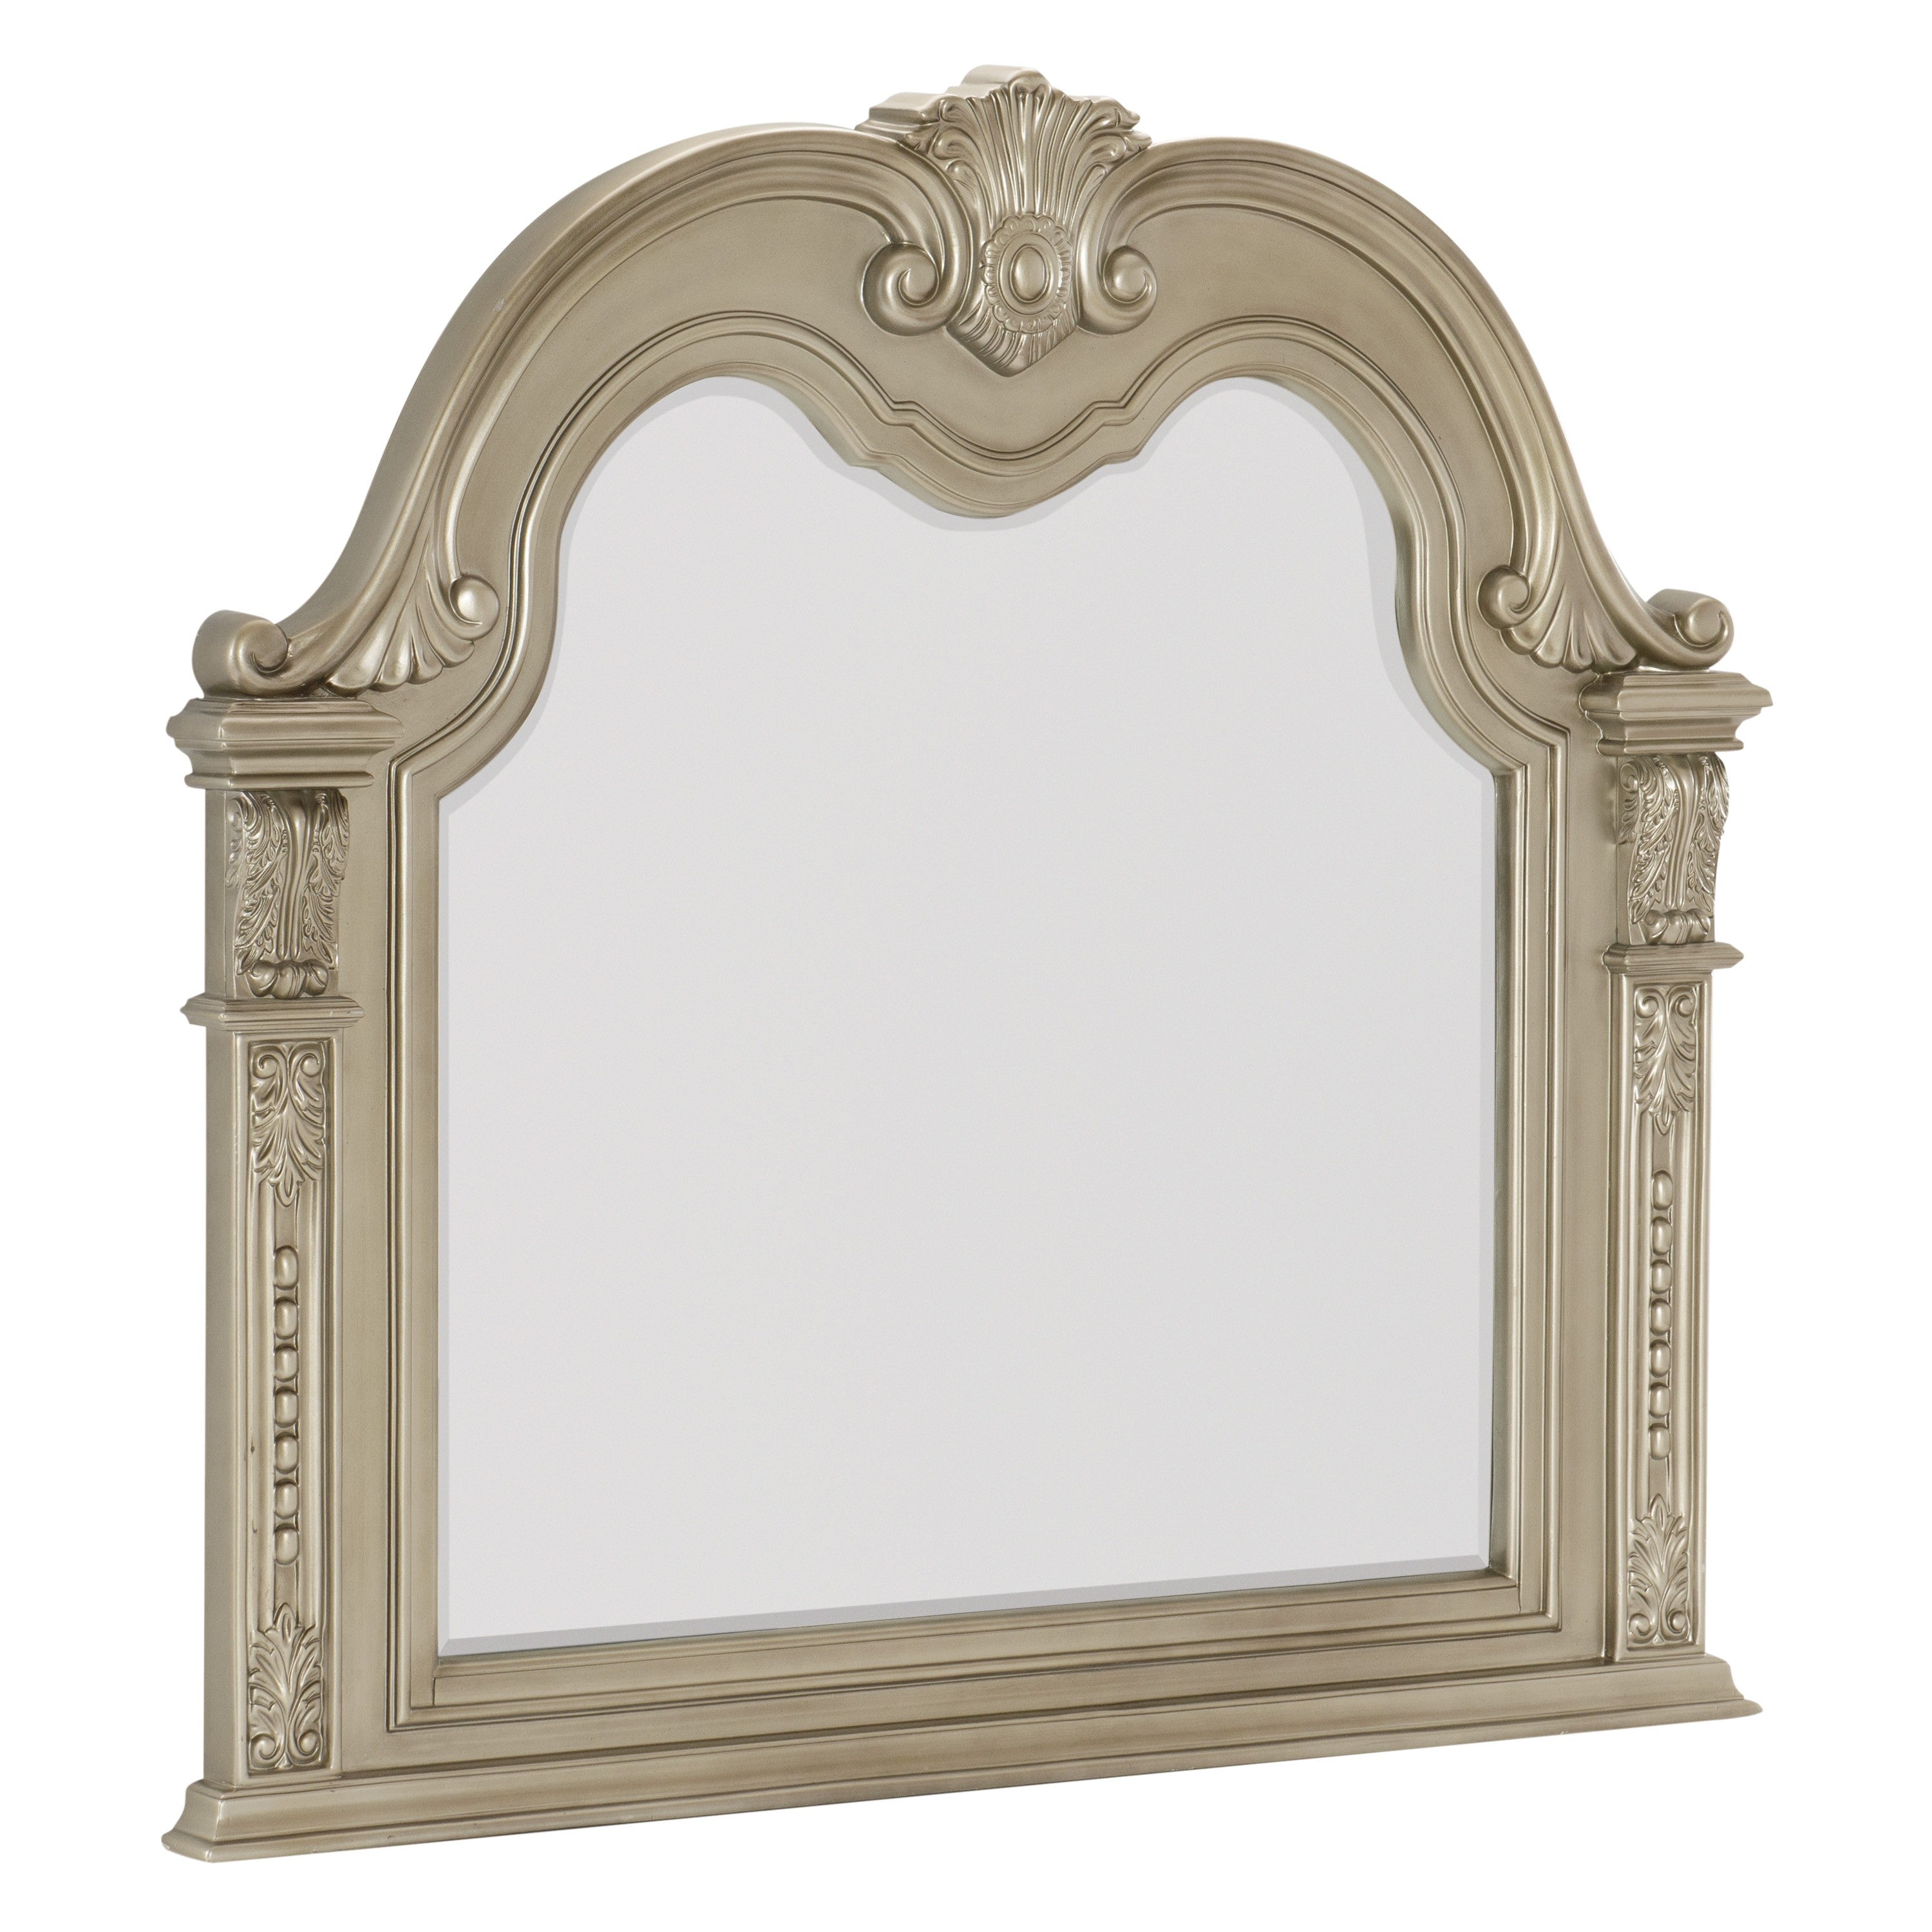 Cavalier Mirror in Gold & Silver